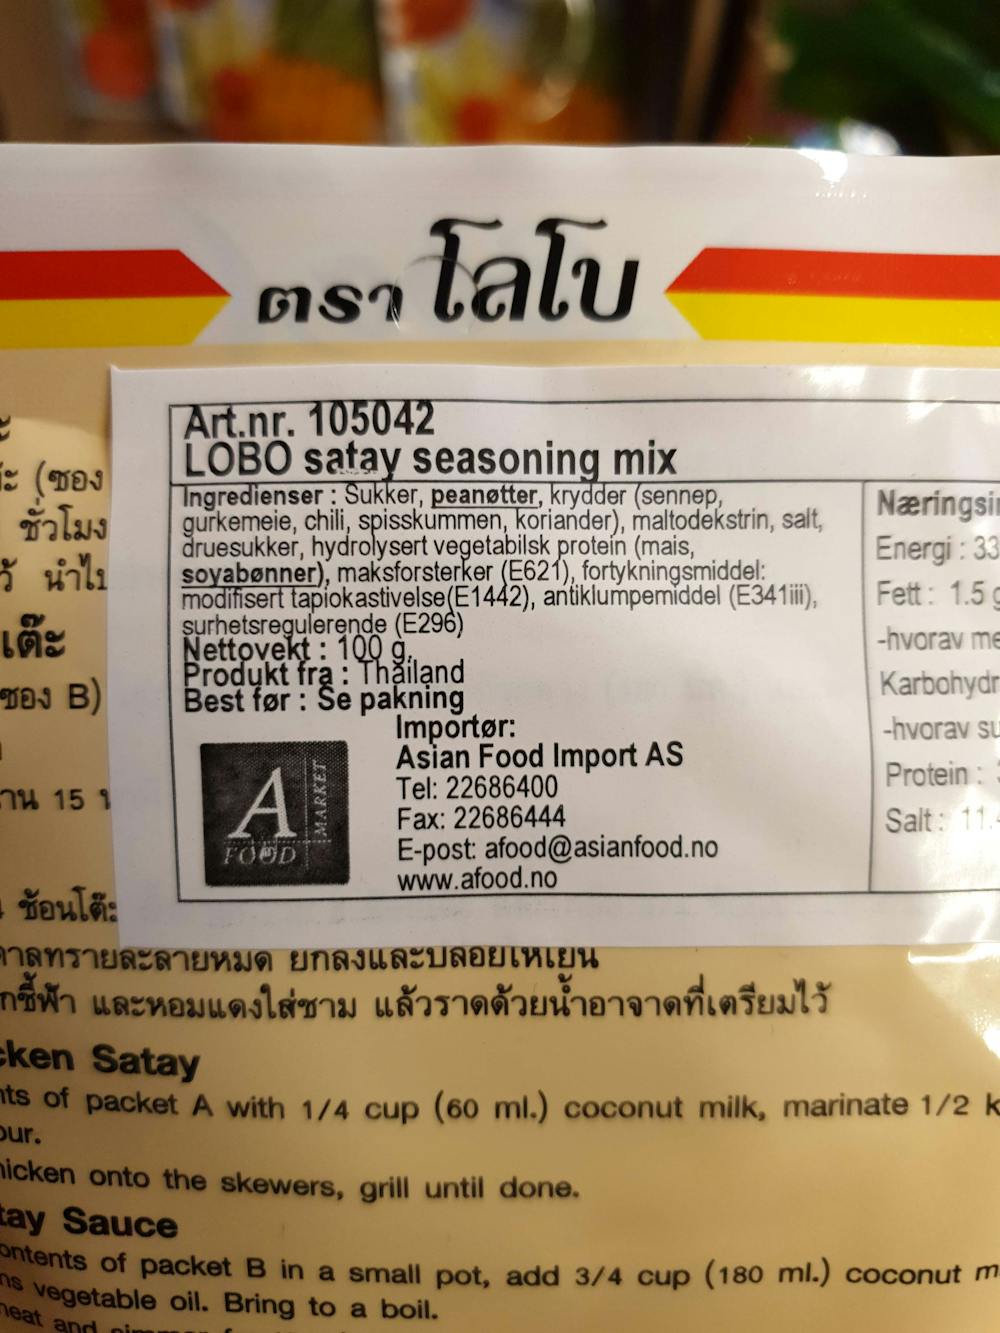 Ingrediensliste - Satay seasoning mix, Lobo